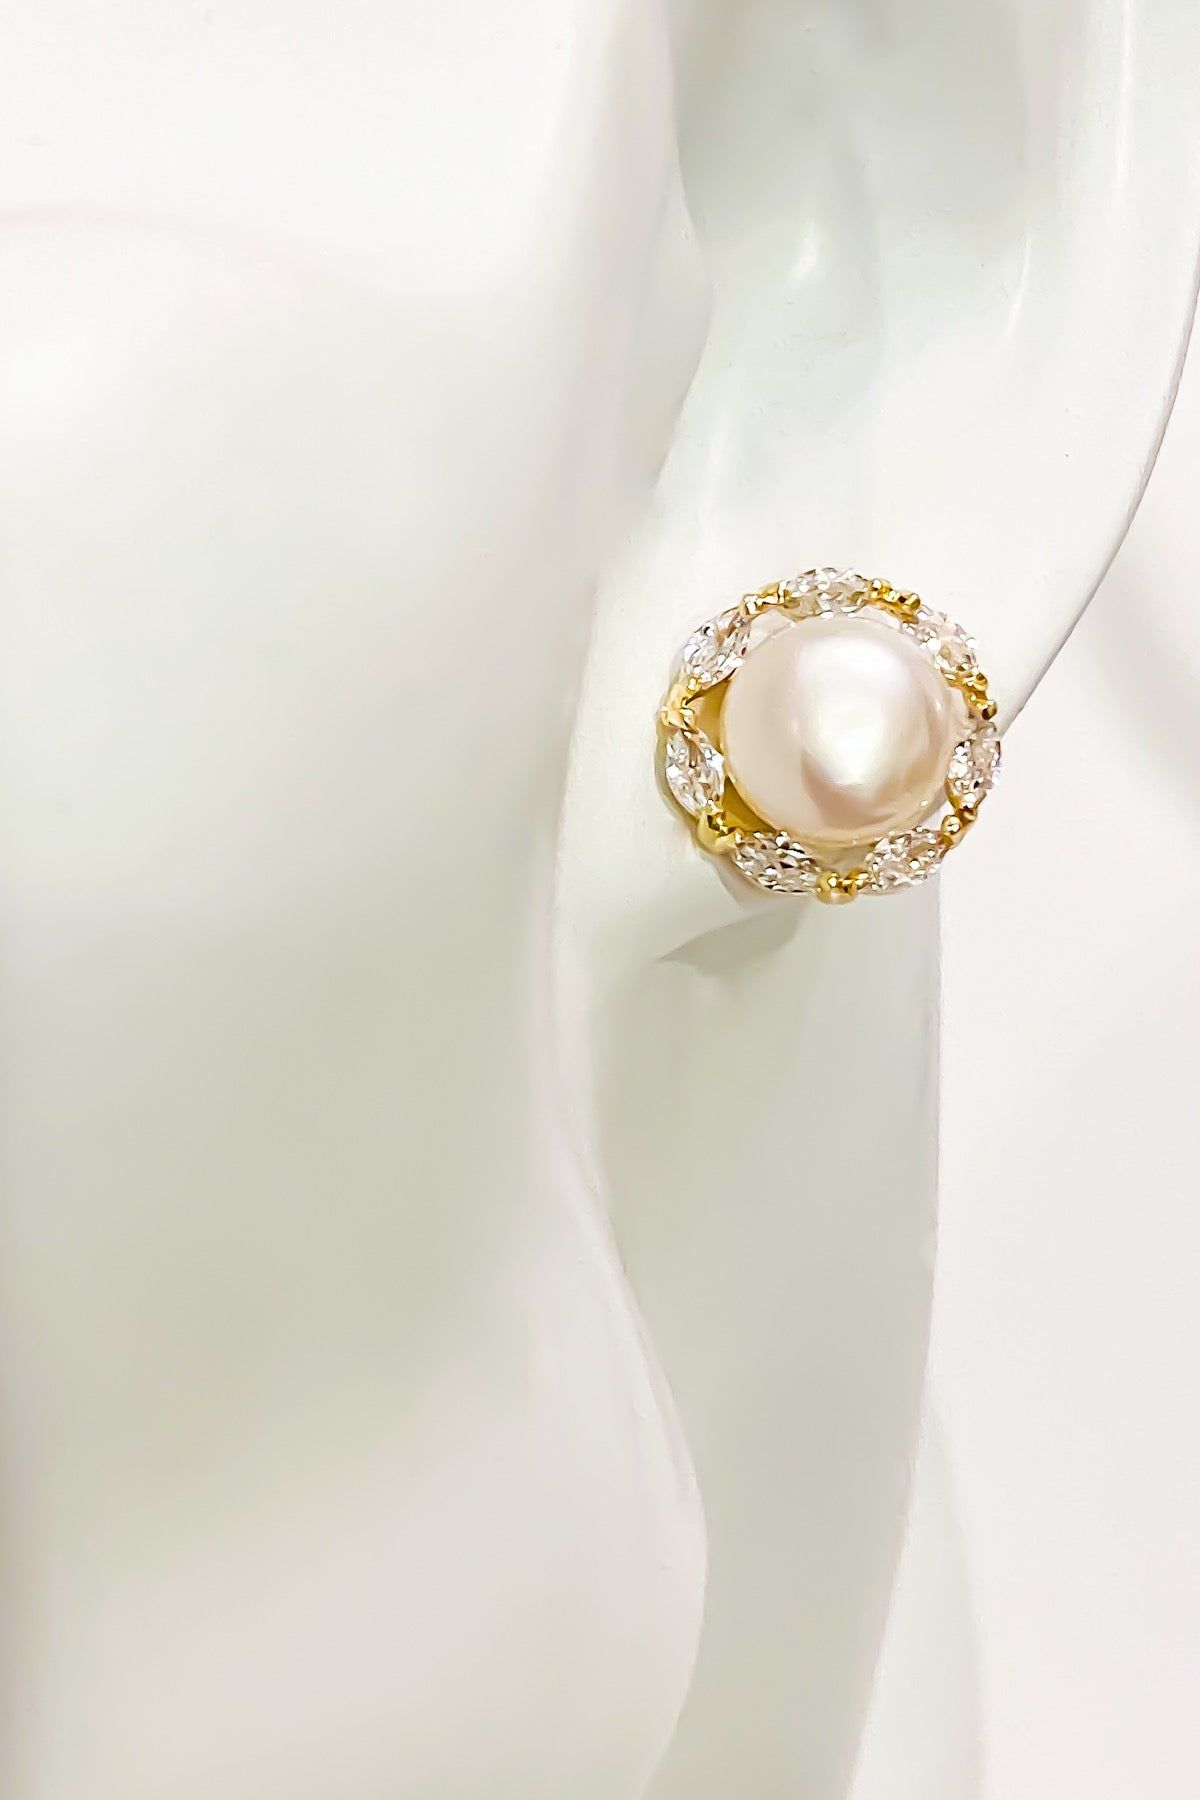 SKYE San Francisco Shop SF Chic Modern Elegant Classy Women Jewelry French Parisian Minimalist Cosette 18K Gold Pearl Earrings 5